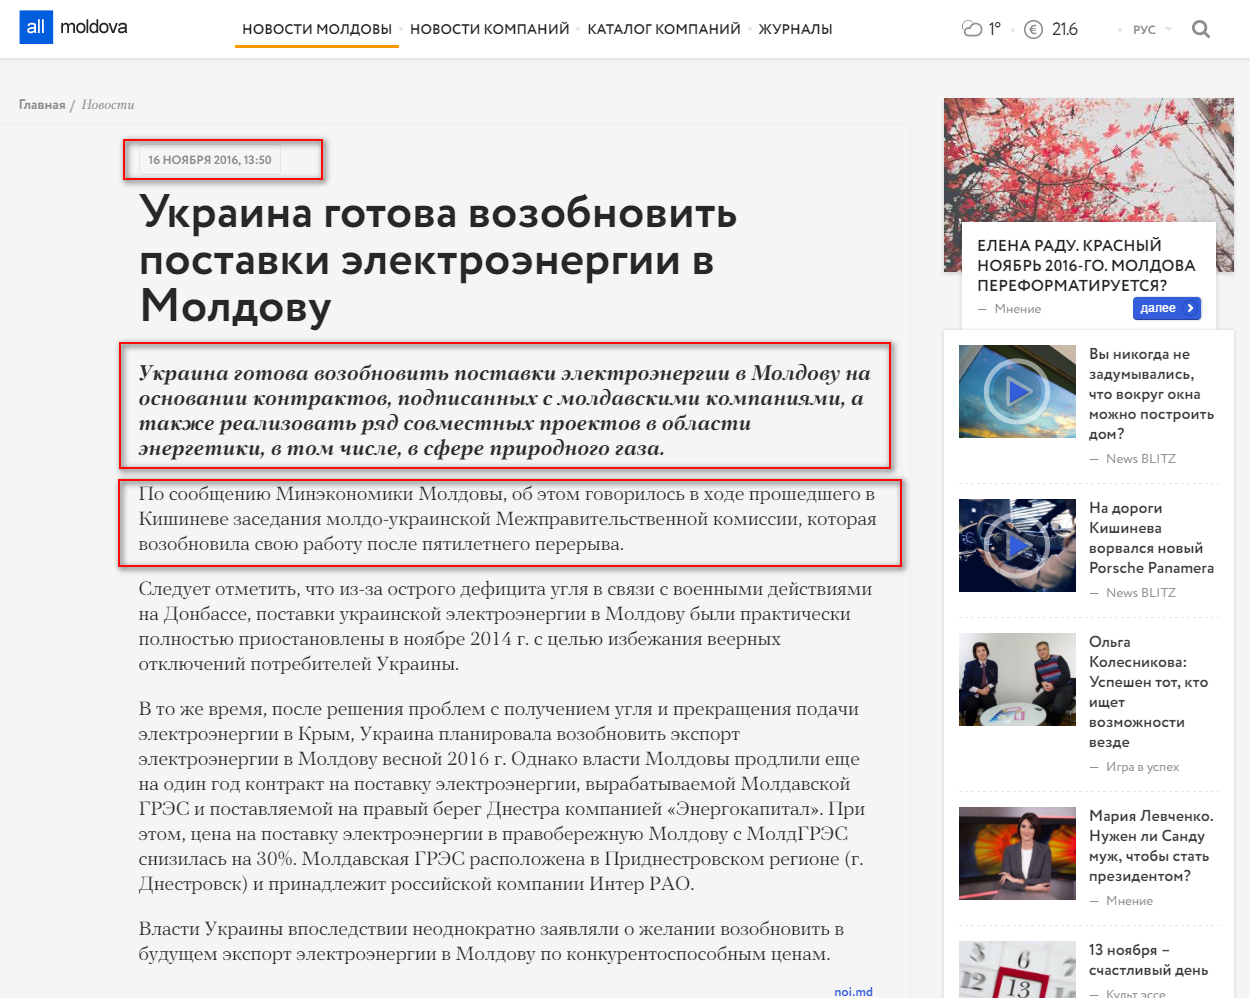 http://www.allmoldova.com/ru/news/ukraina-ghotova-vozobnovit-postavki-eliektroenierghii-v-moldovu